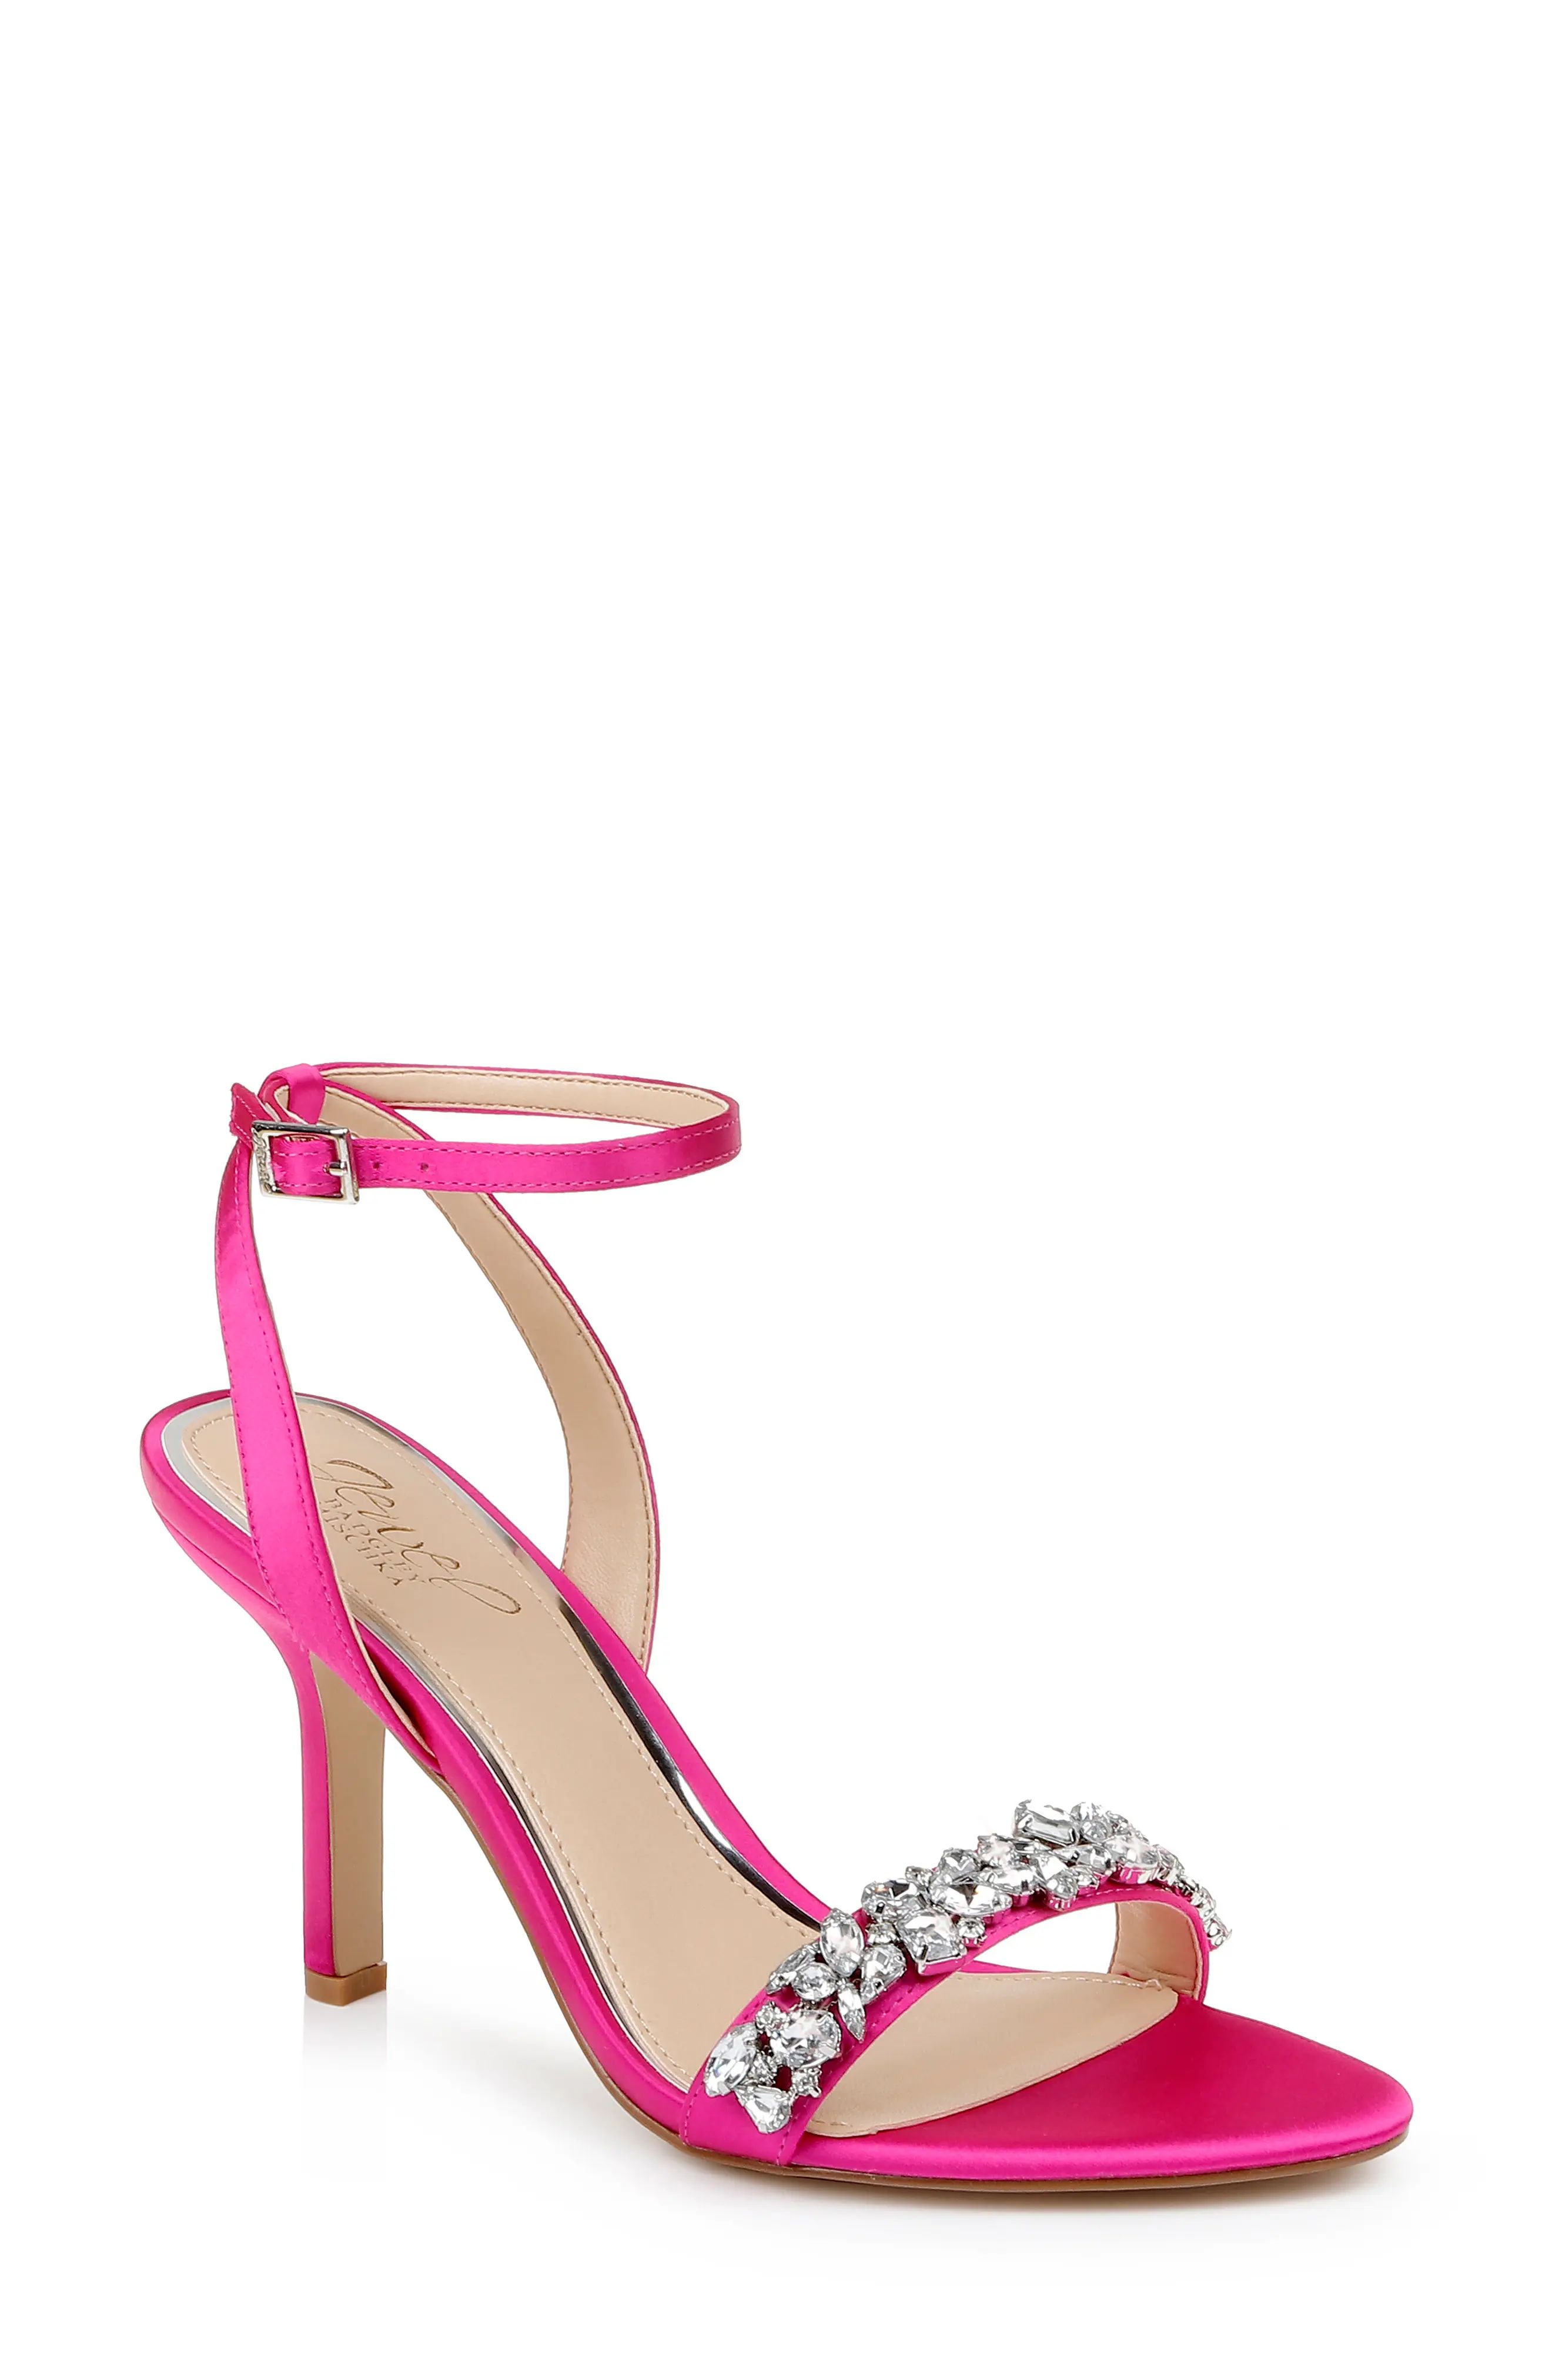 Jewel Badgley Mischka Ojai Crystal Ankle Strap Sandal in Neon Pink Satin at Nordstrom, Size 10 | Nordstrom